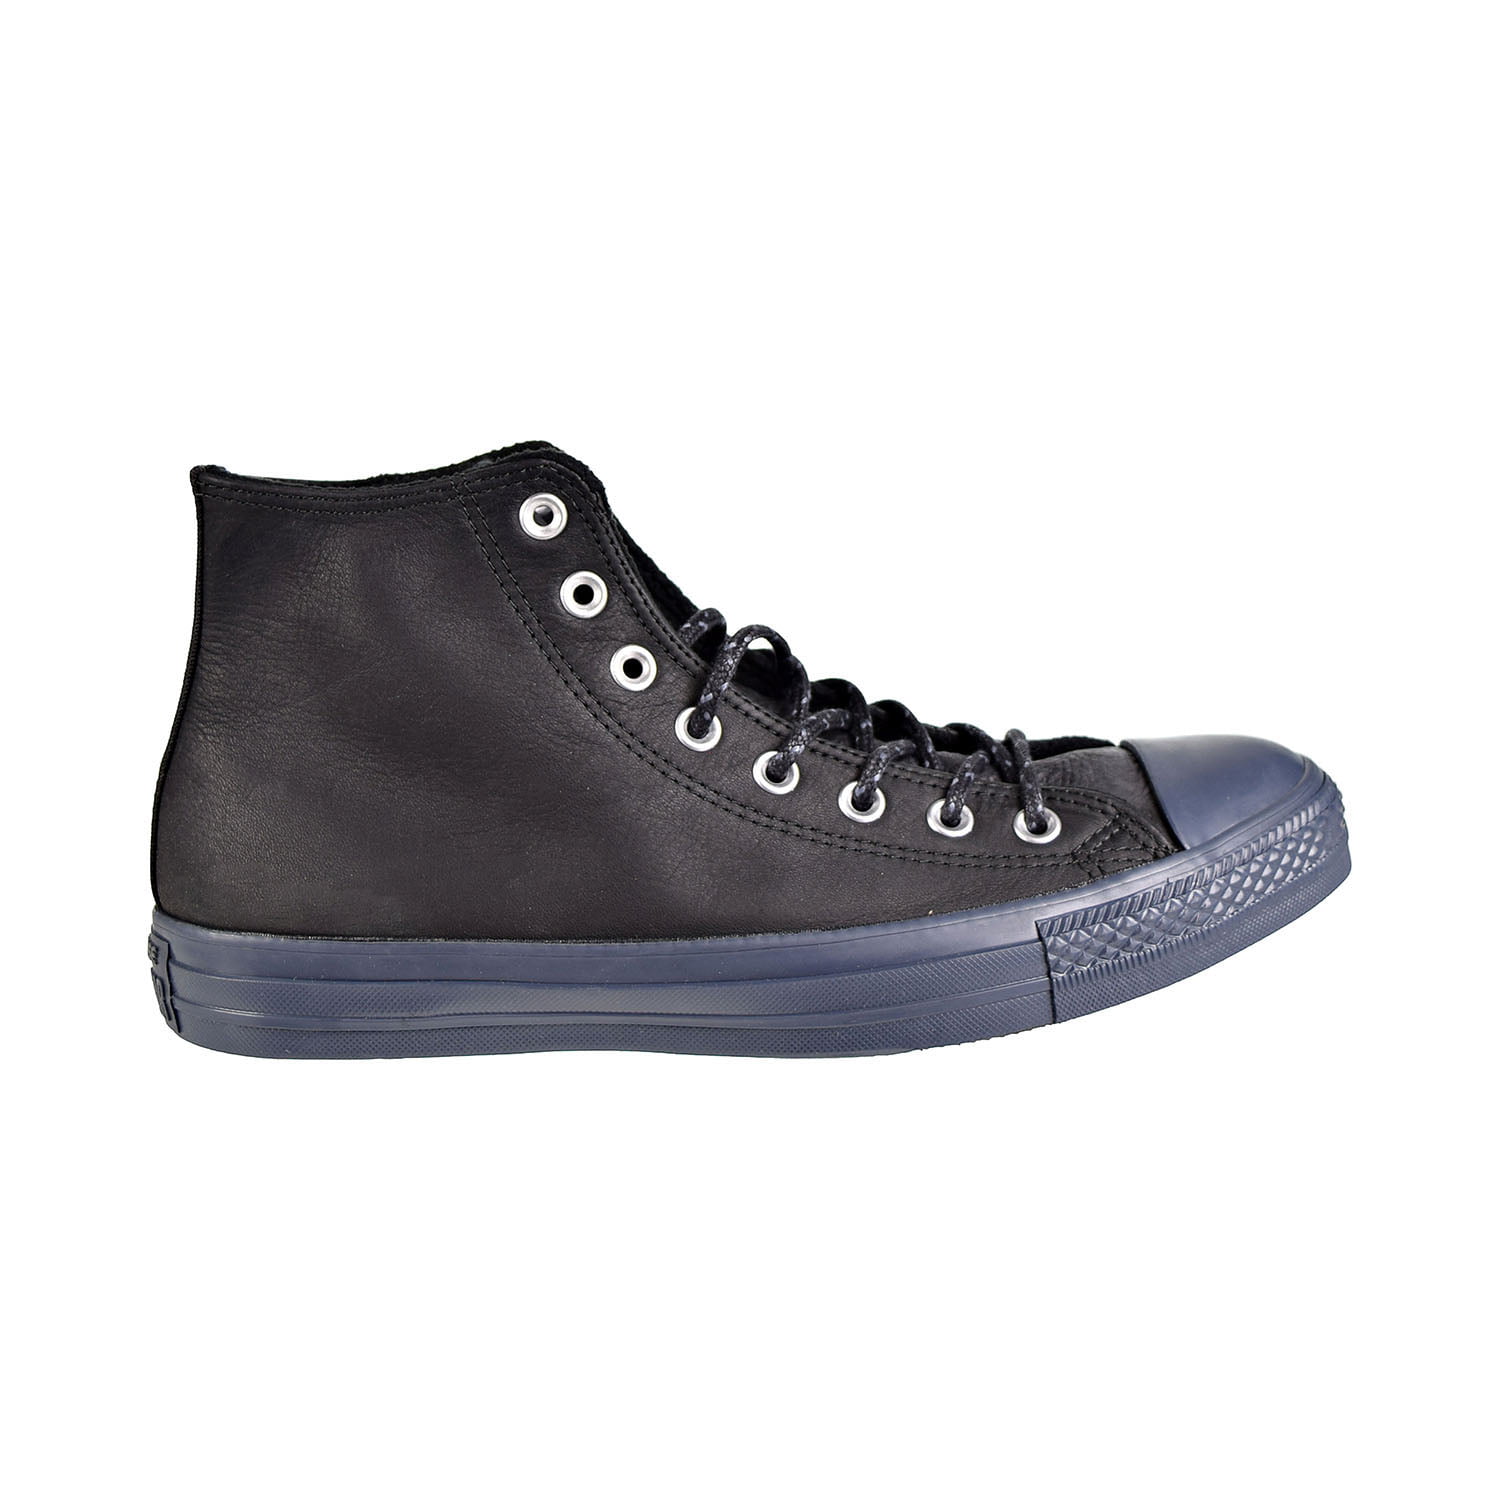 Converse Chuck Taylor All Star Hi Thermal Men's Shoes Black-Sharkskin 157514c Walmart.com